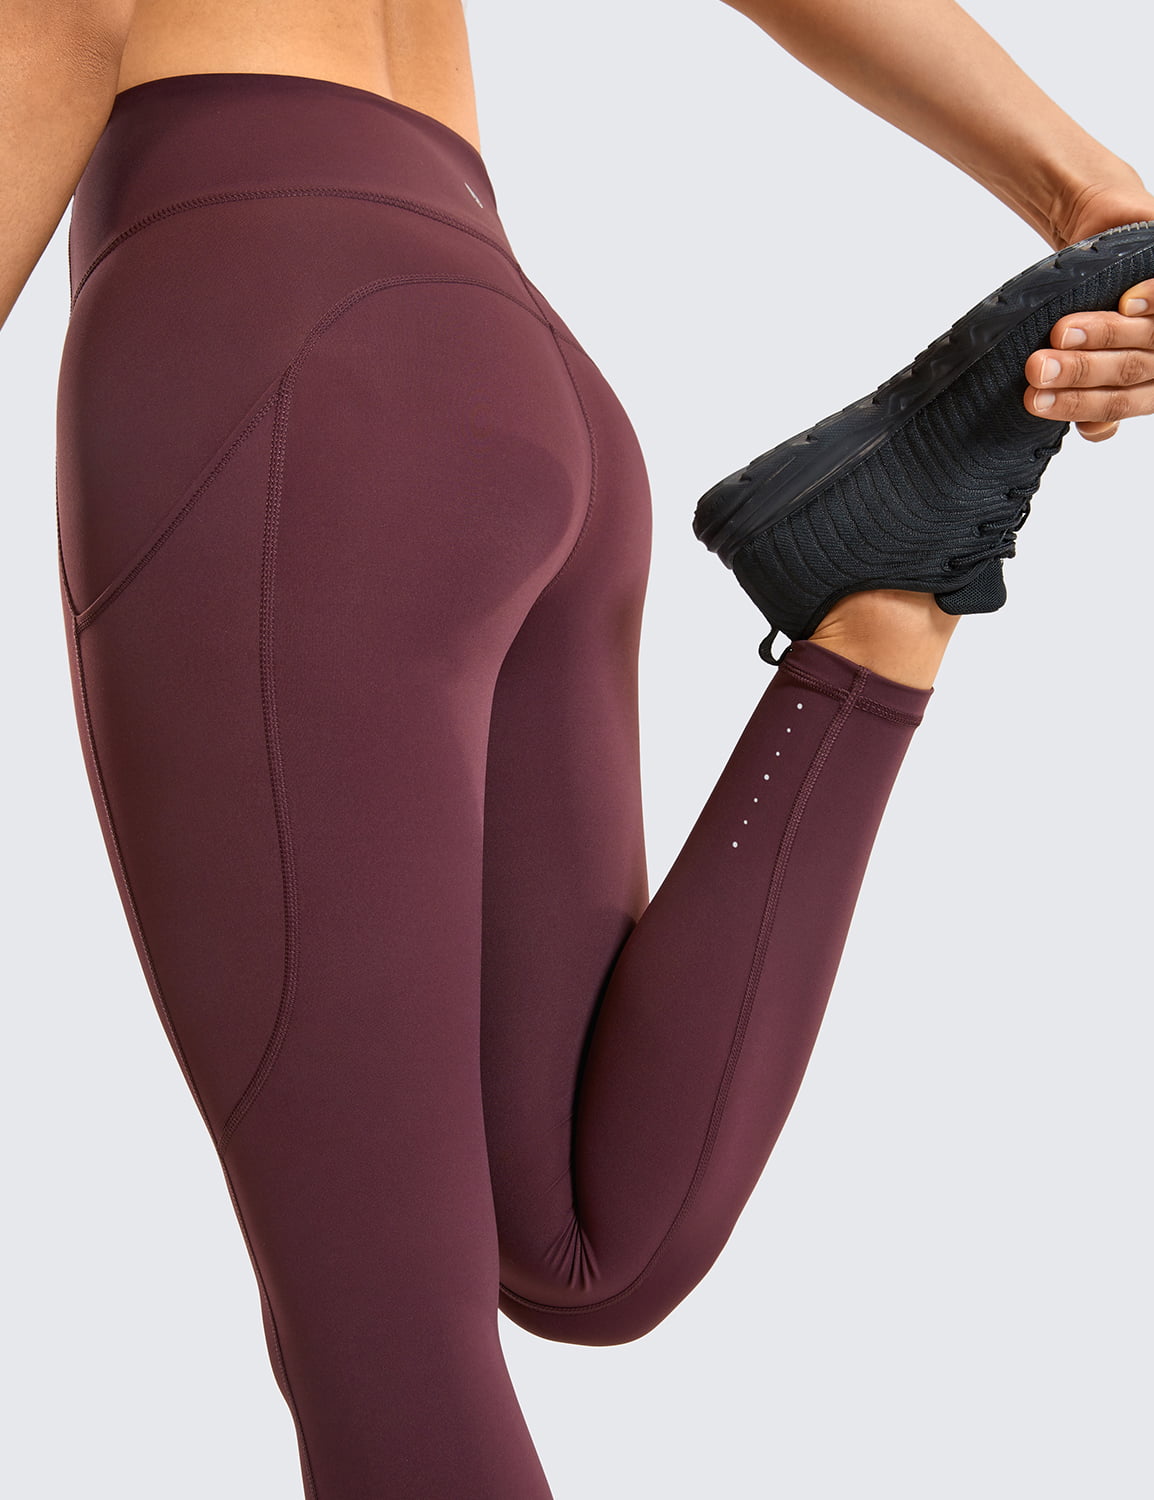 CRZ YOGA High Waisted Yoga Pants Women's Workout Capris Athletic Leggings  with Pocket Luxury Naked Feeling - 17 Inches